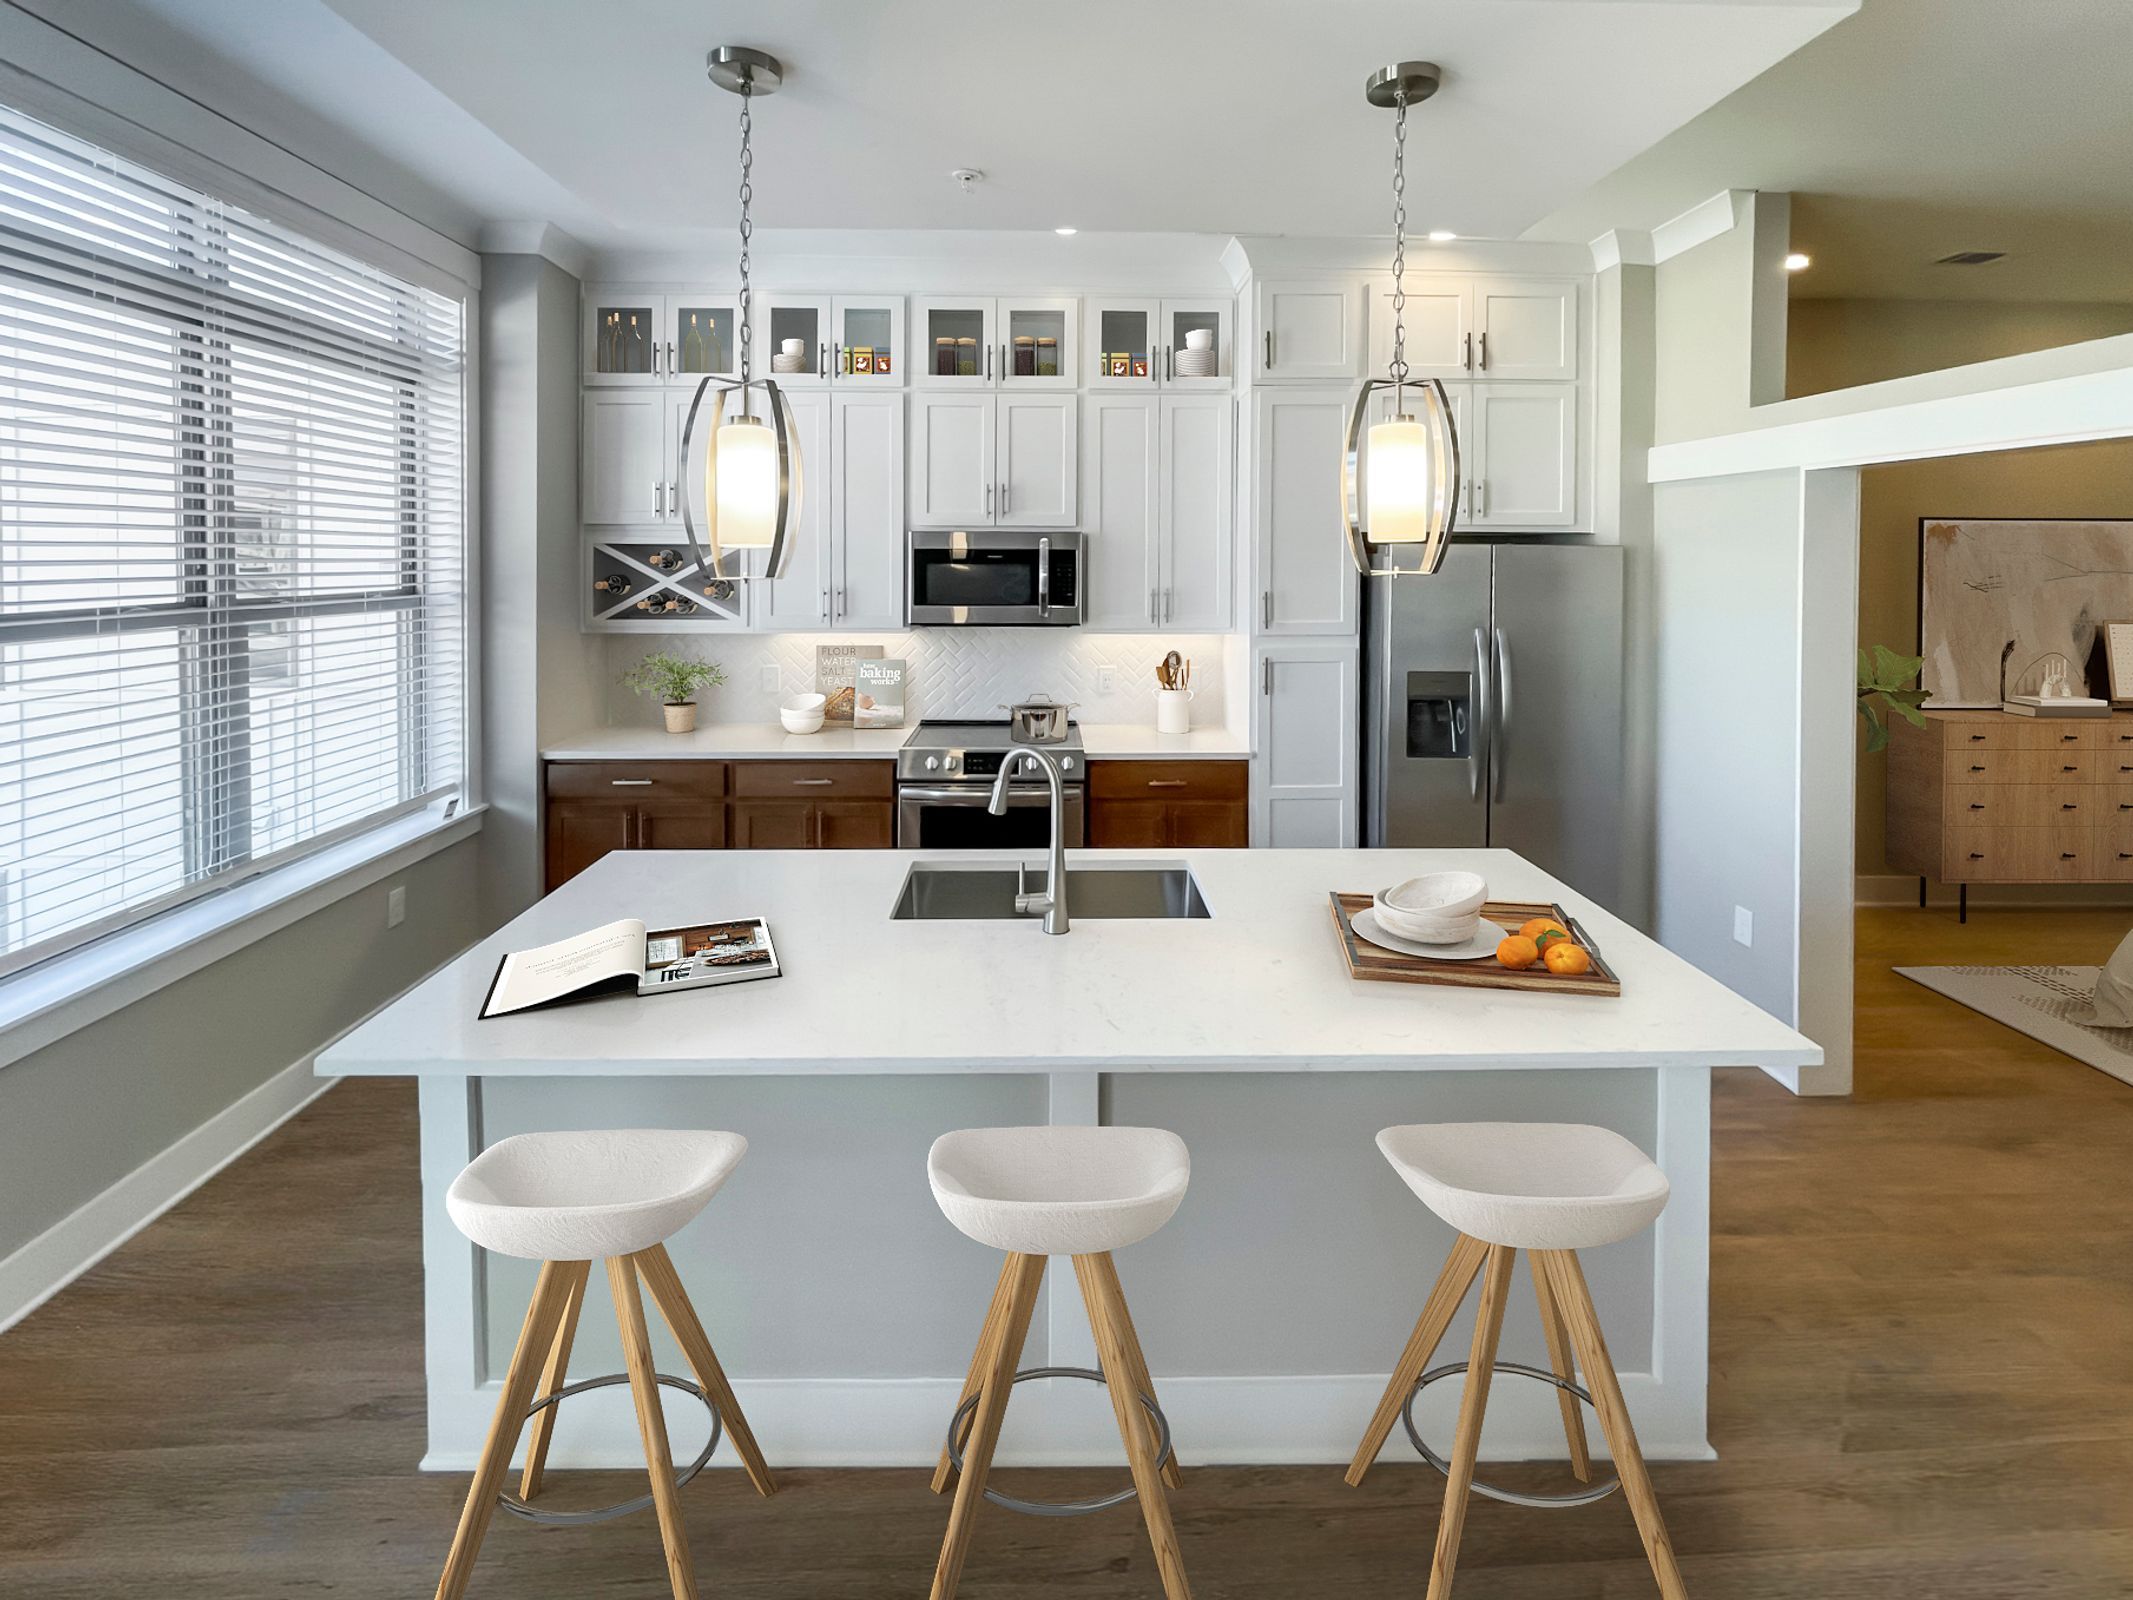 Luxury apartment interior showing kitchen island, luxury vinyl plank flooring, and stainless steel appliances